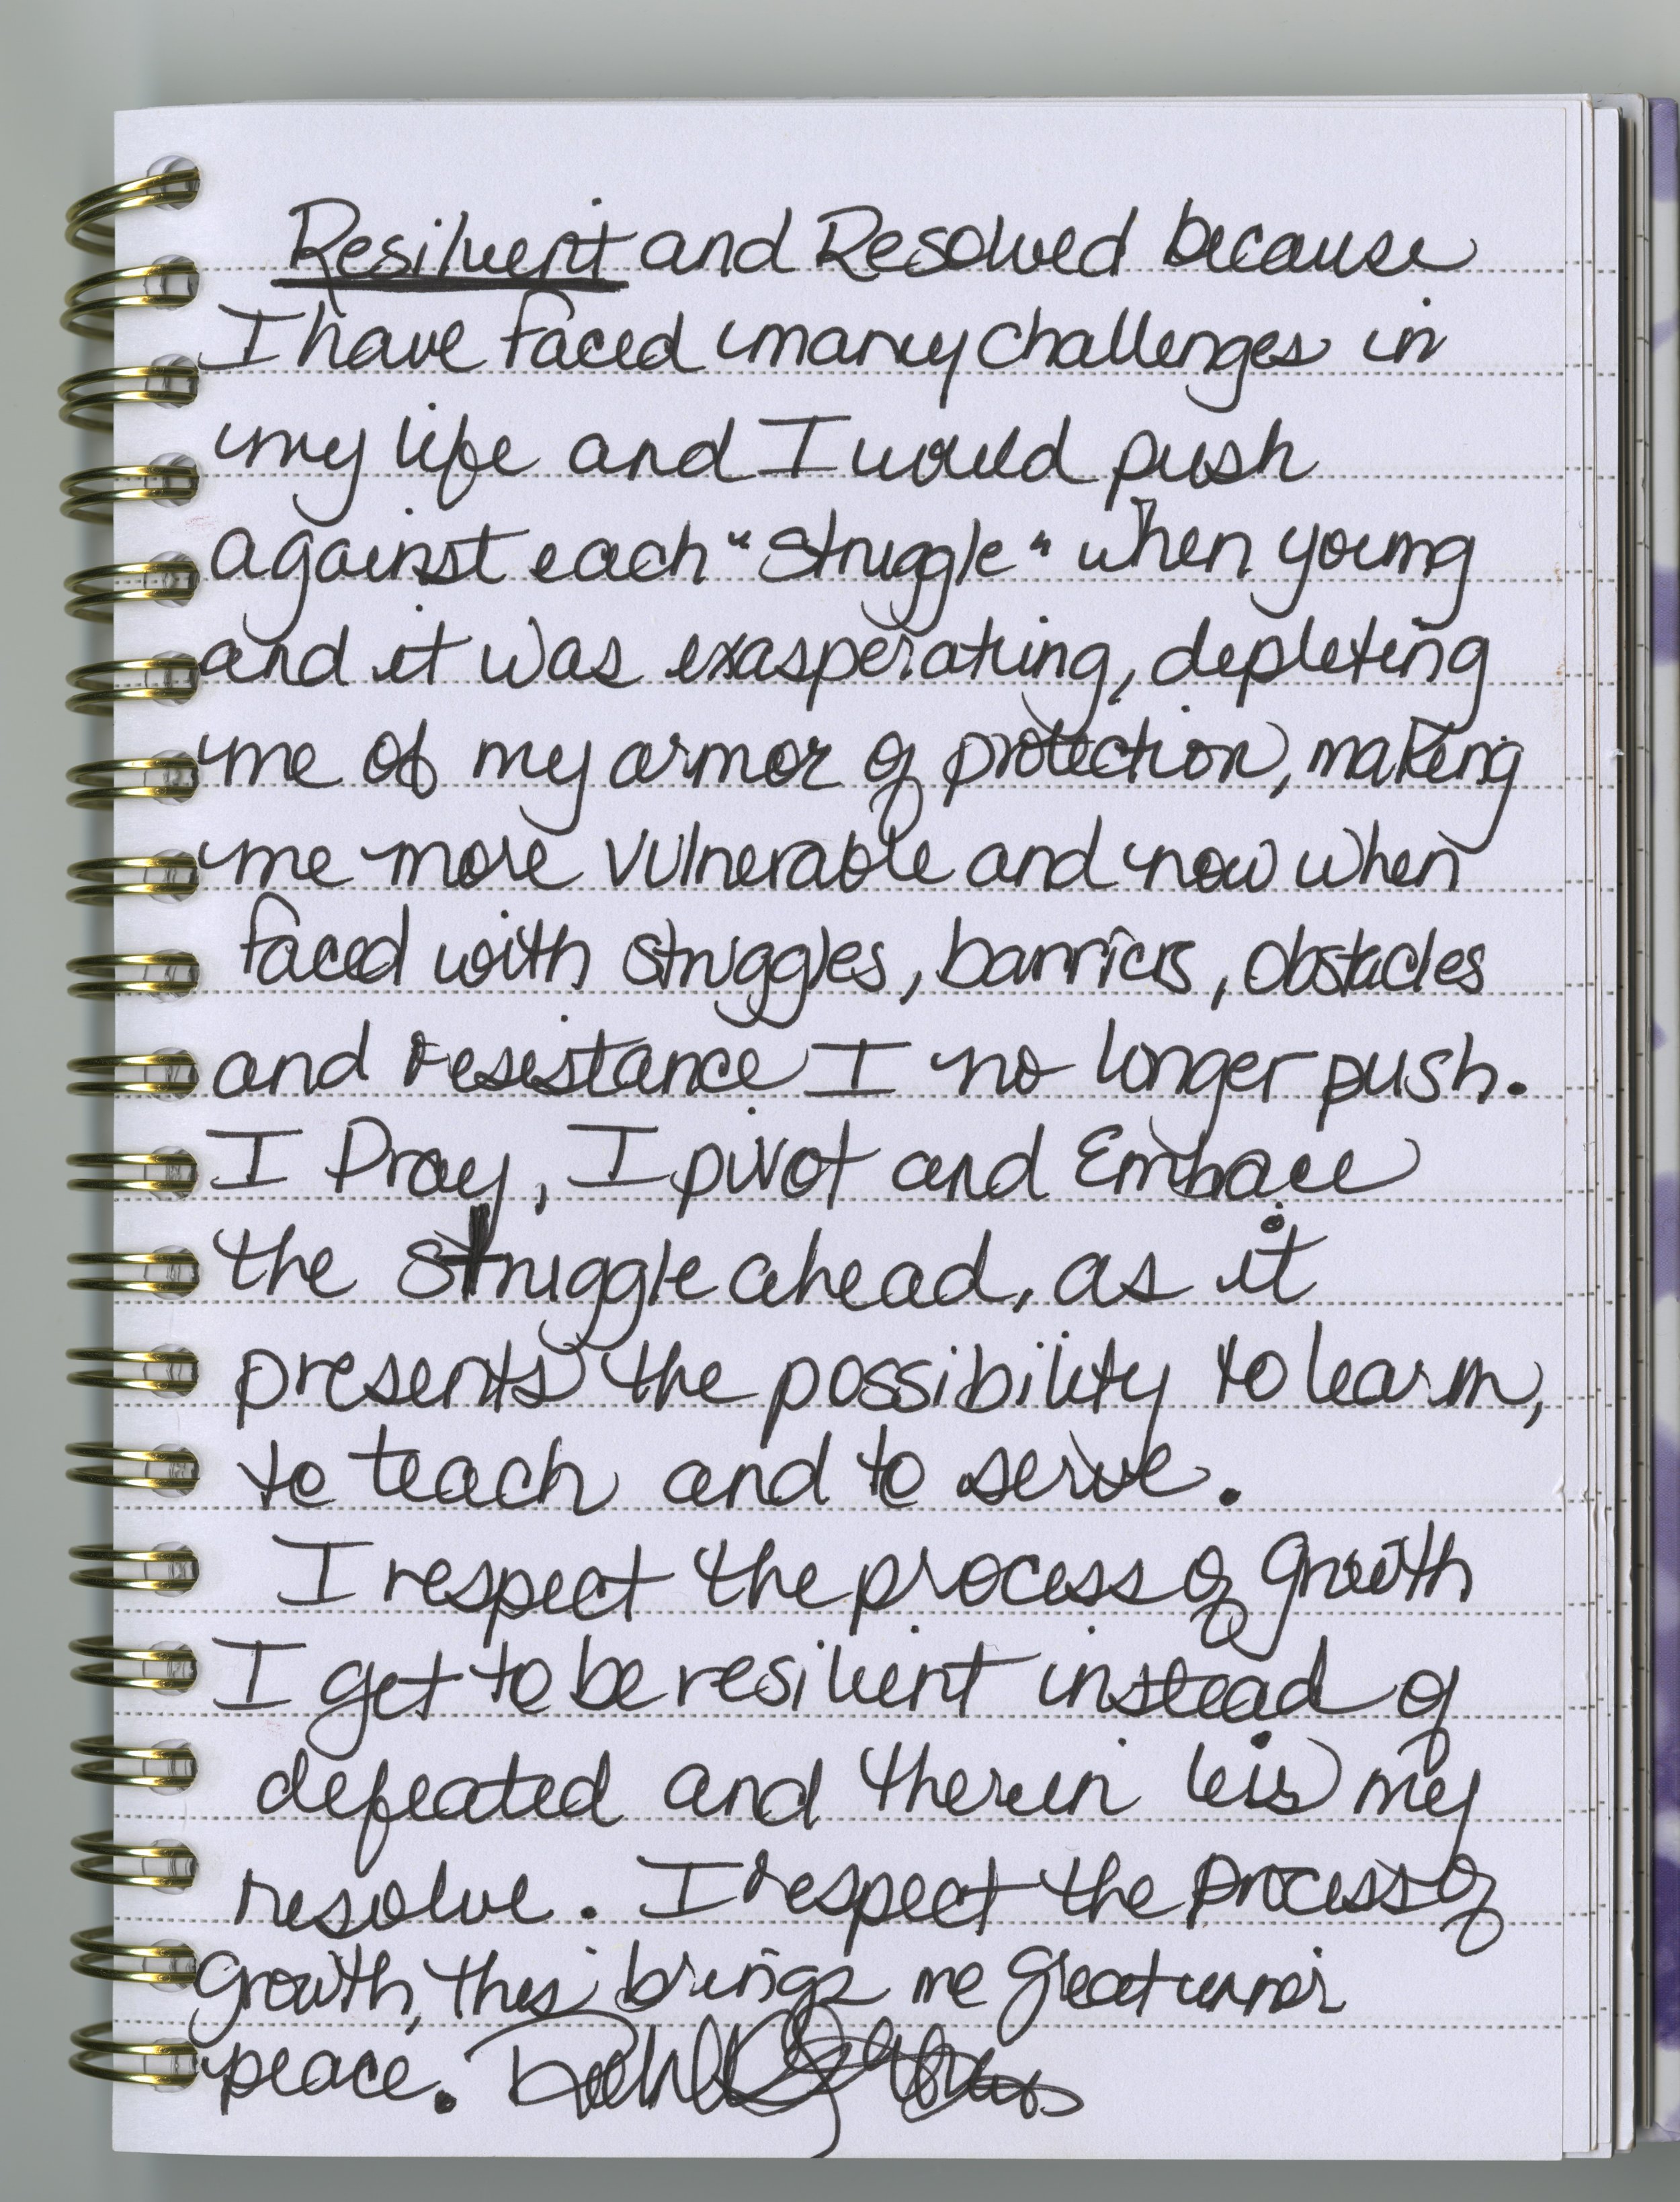 Rebekah Karmona-Asmar's handwritten journal entry.